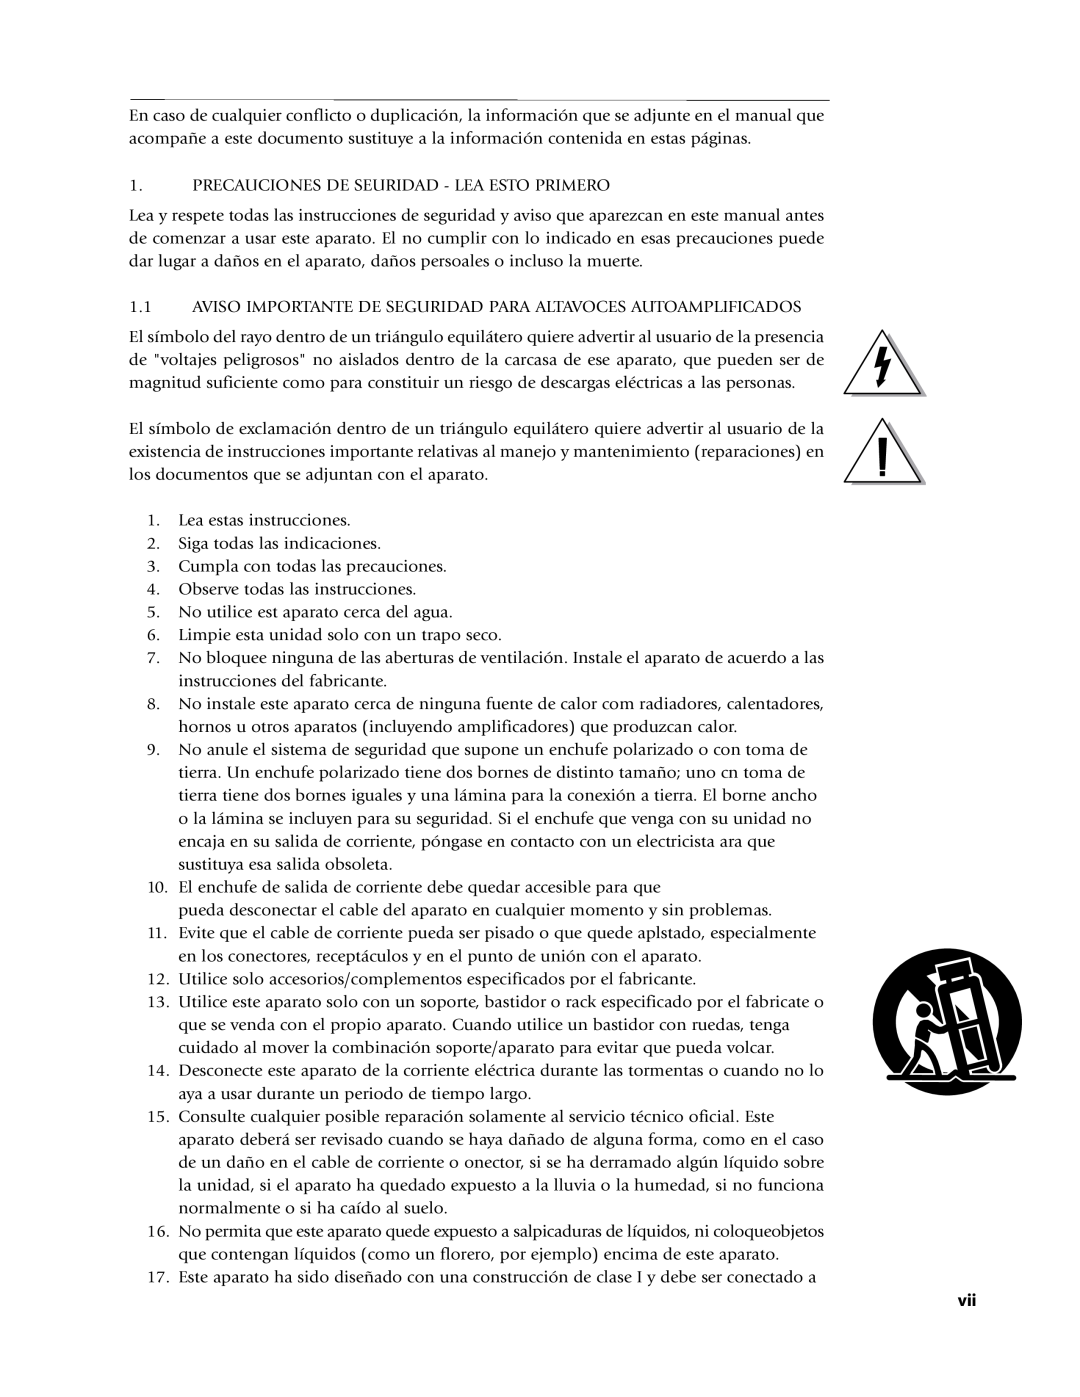 EAW Loudspeaker's owner manual Precauciones De Seuridad - Lea Esto Primero 